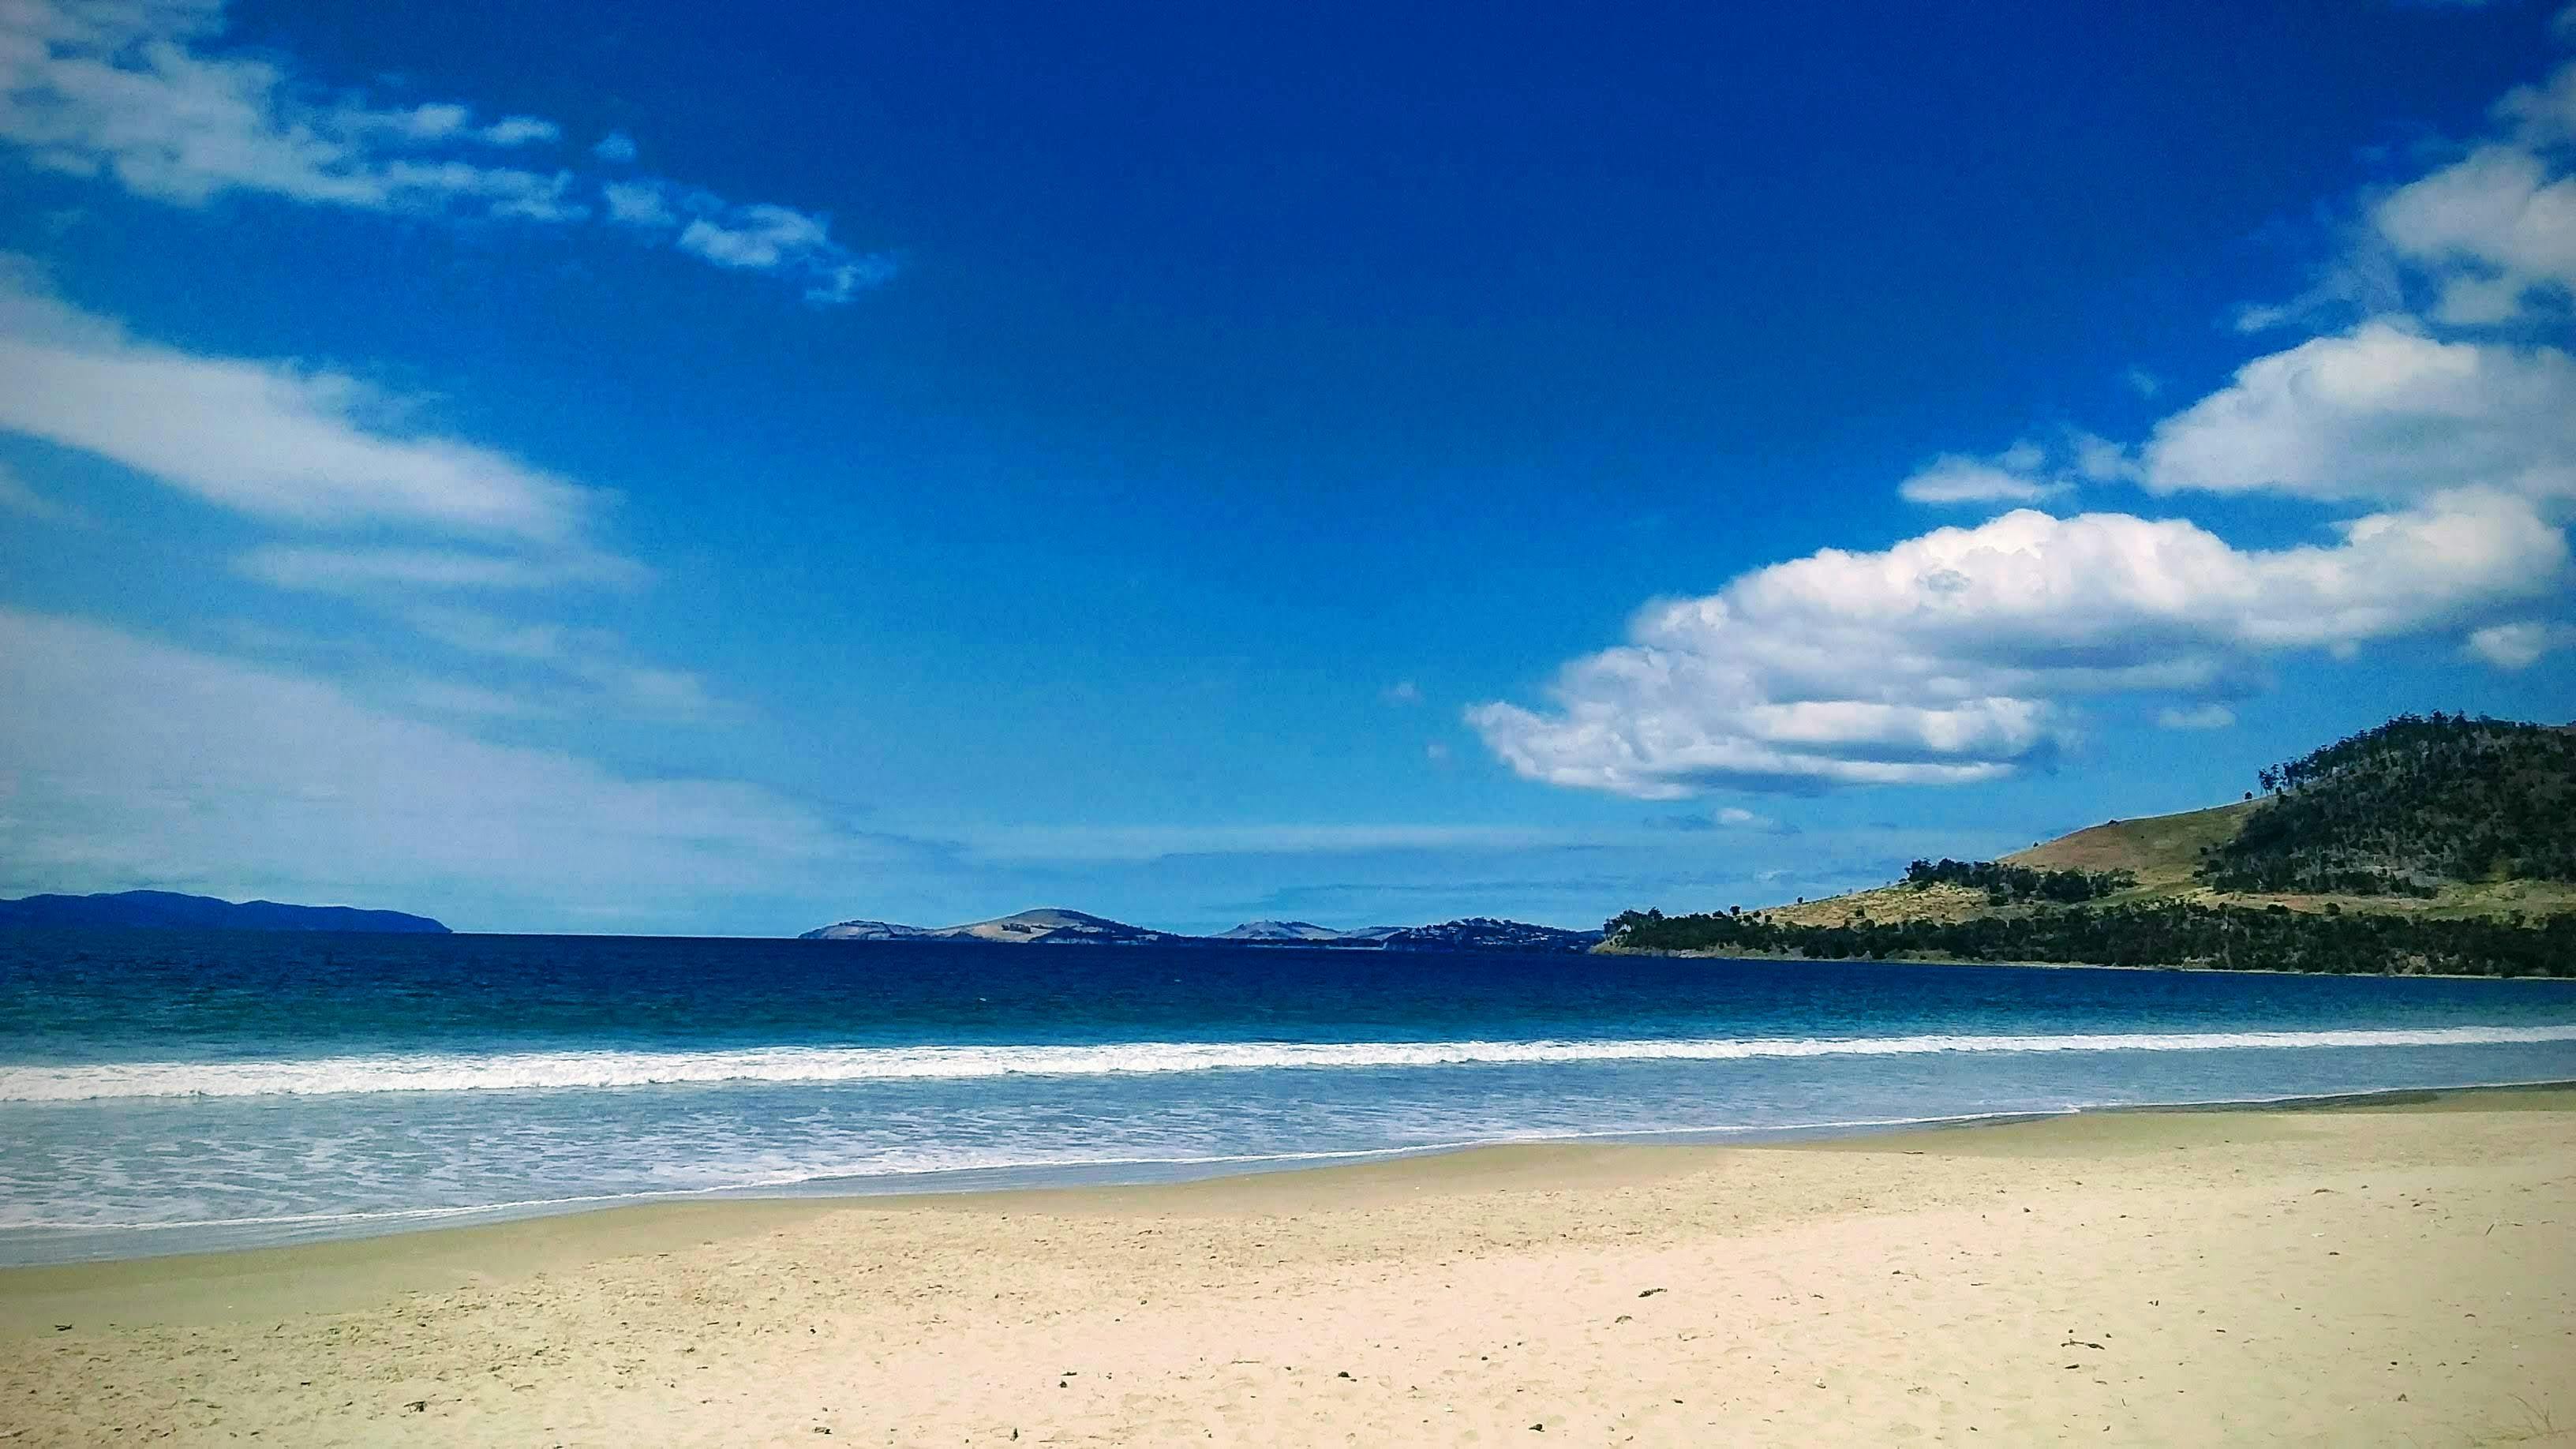 Tasmania's Seven Mile Beach near Hobart